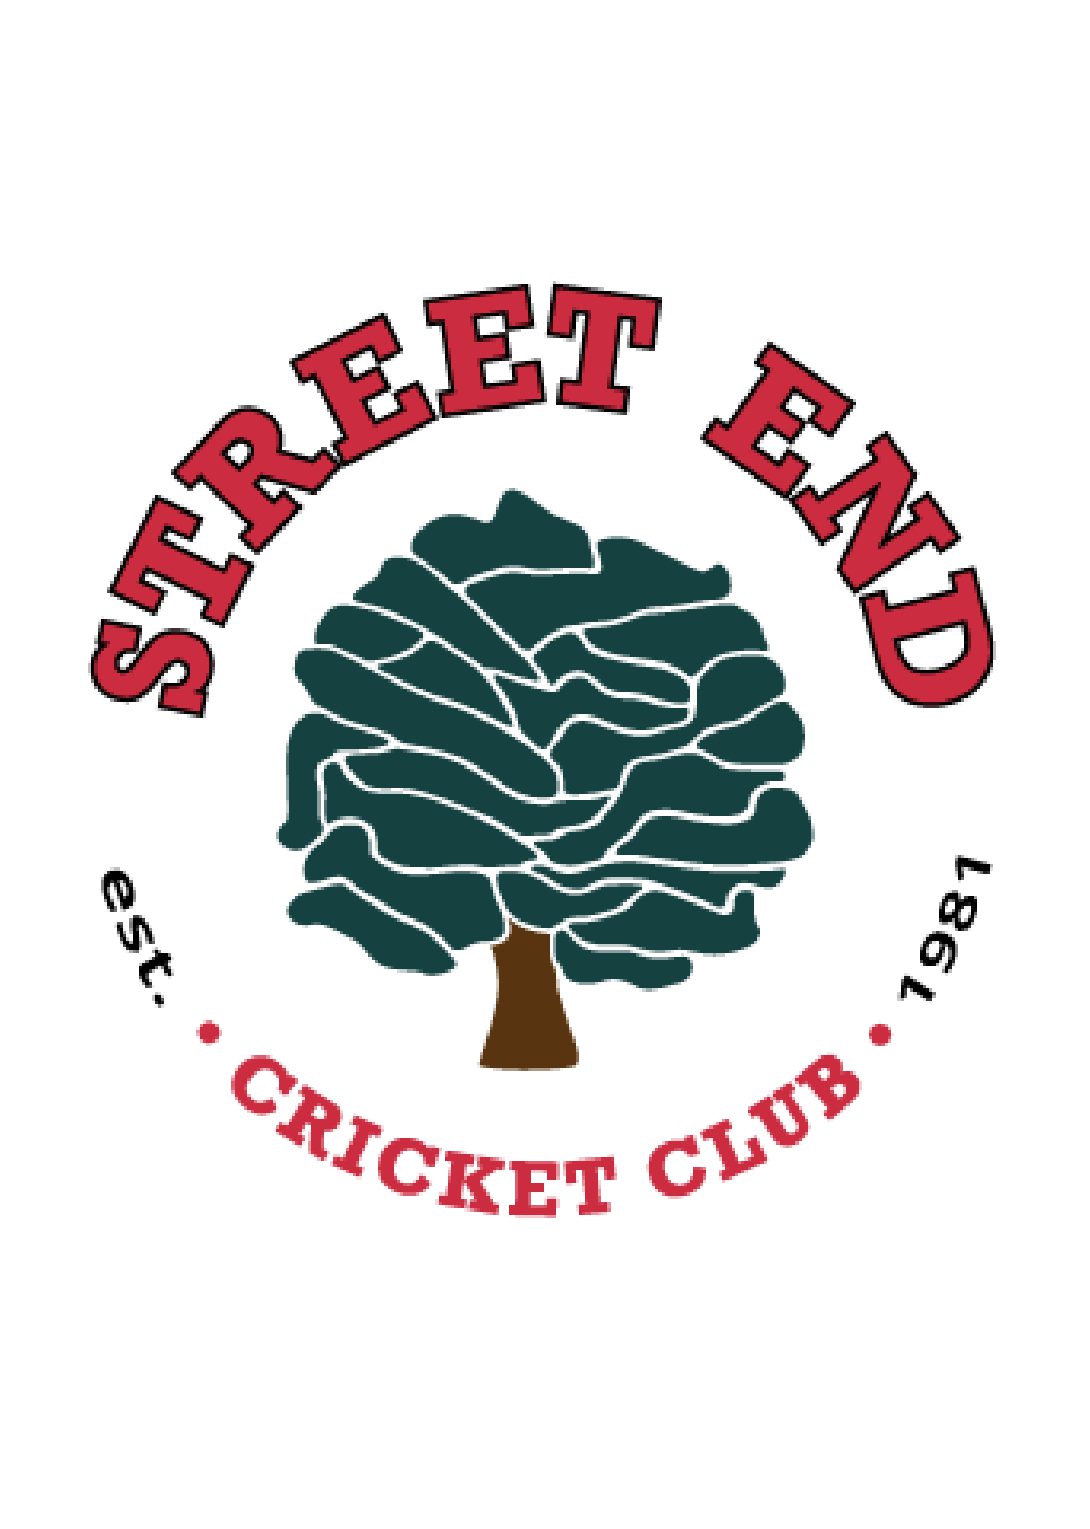 Street End CC